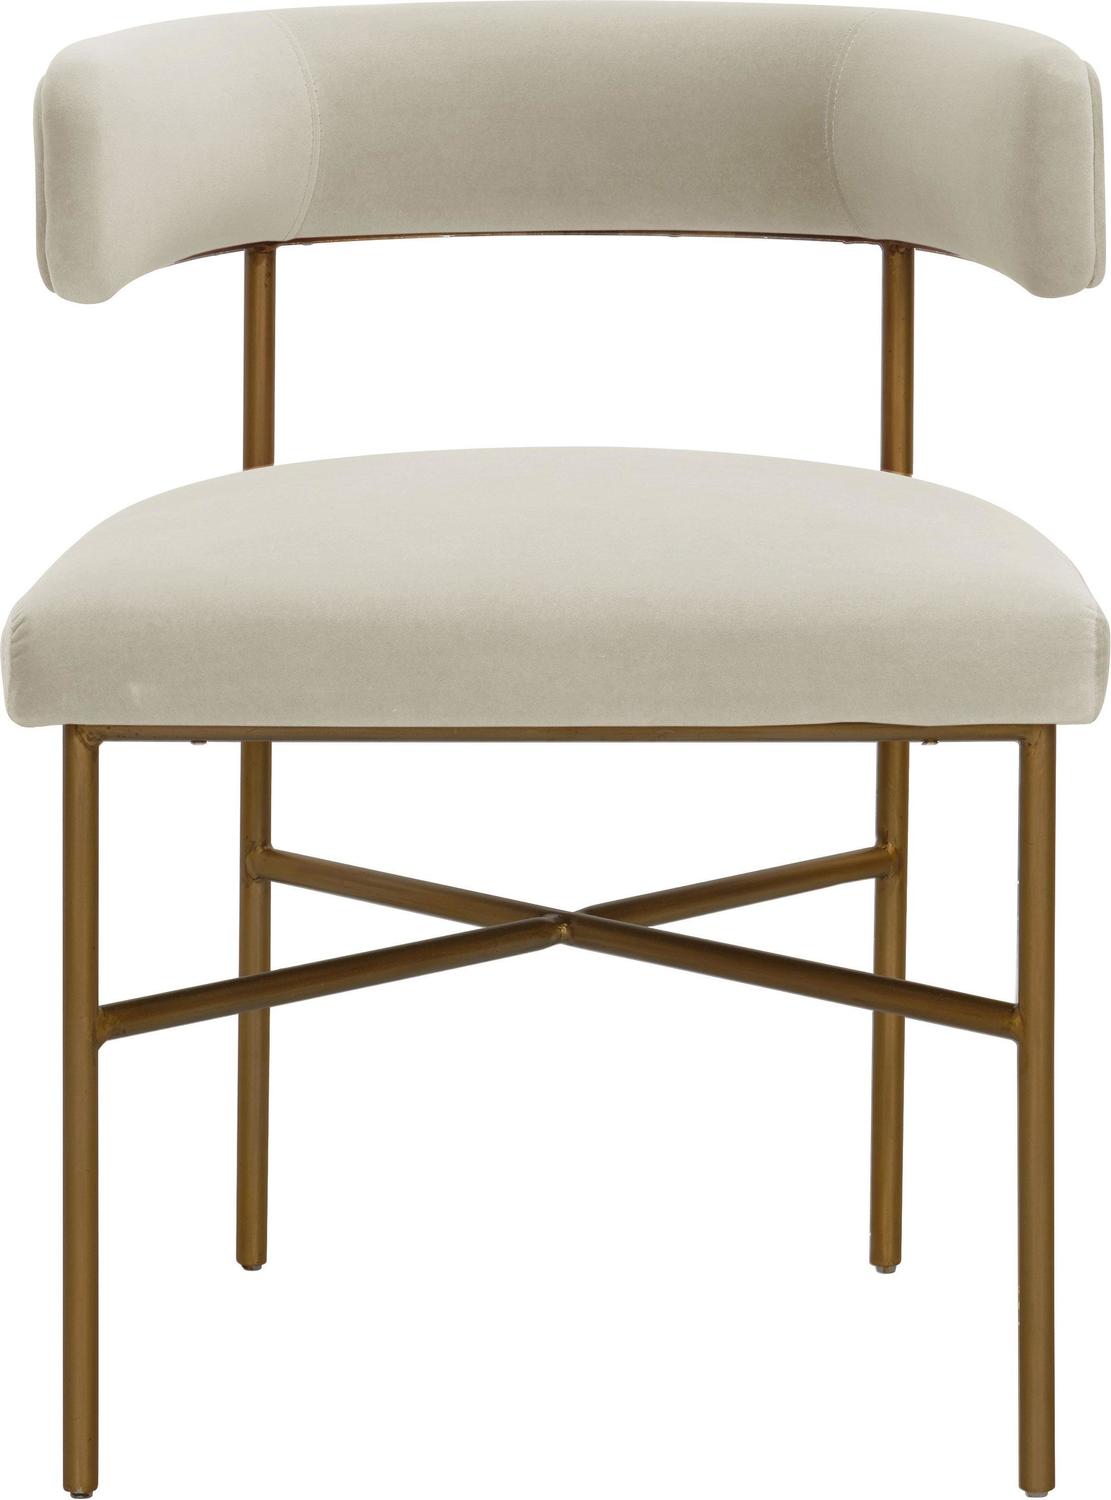 fur furniture Tov Furniture Dining Chairs Chairs Cream